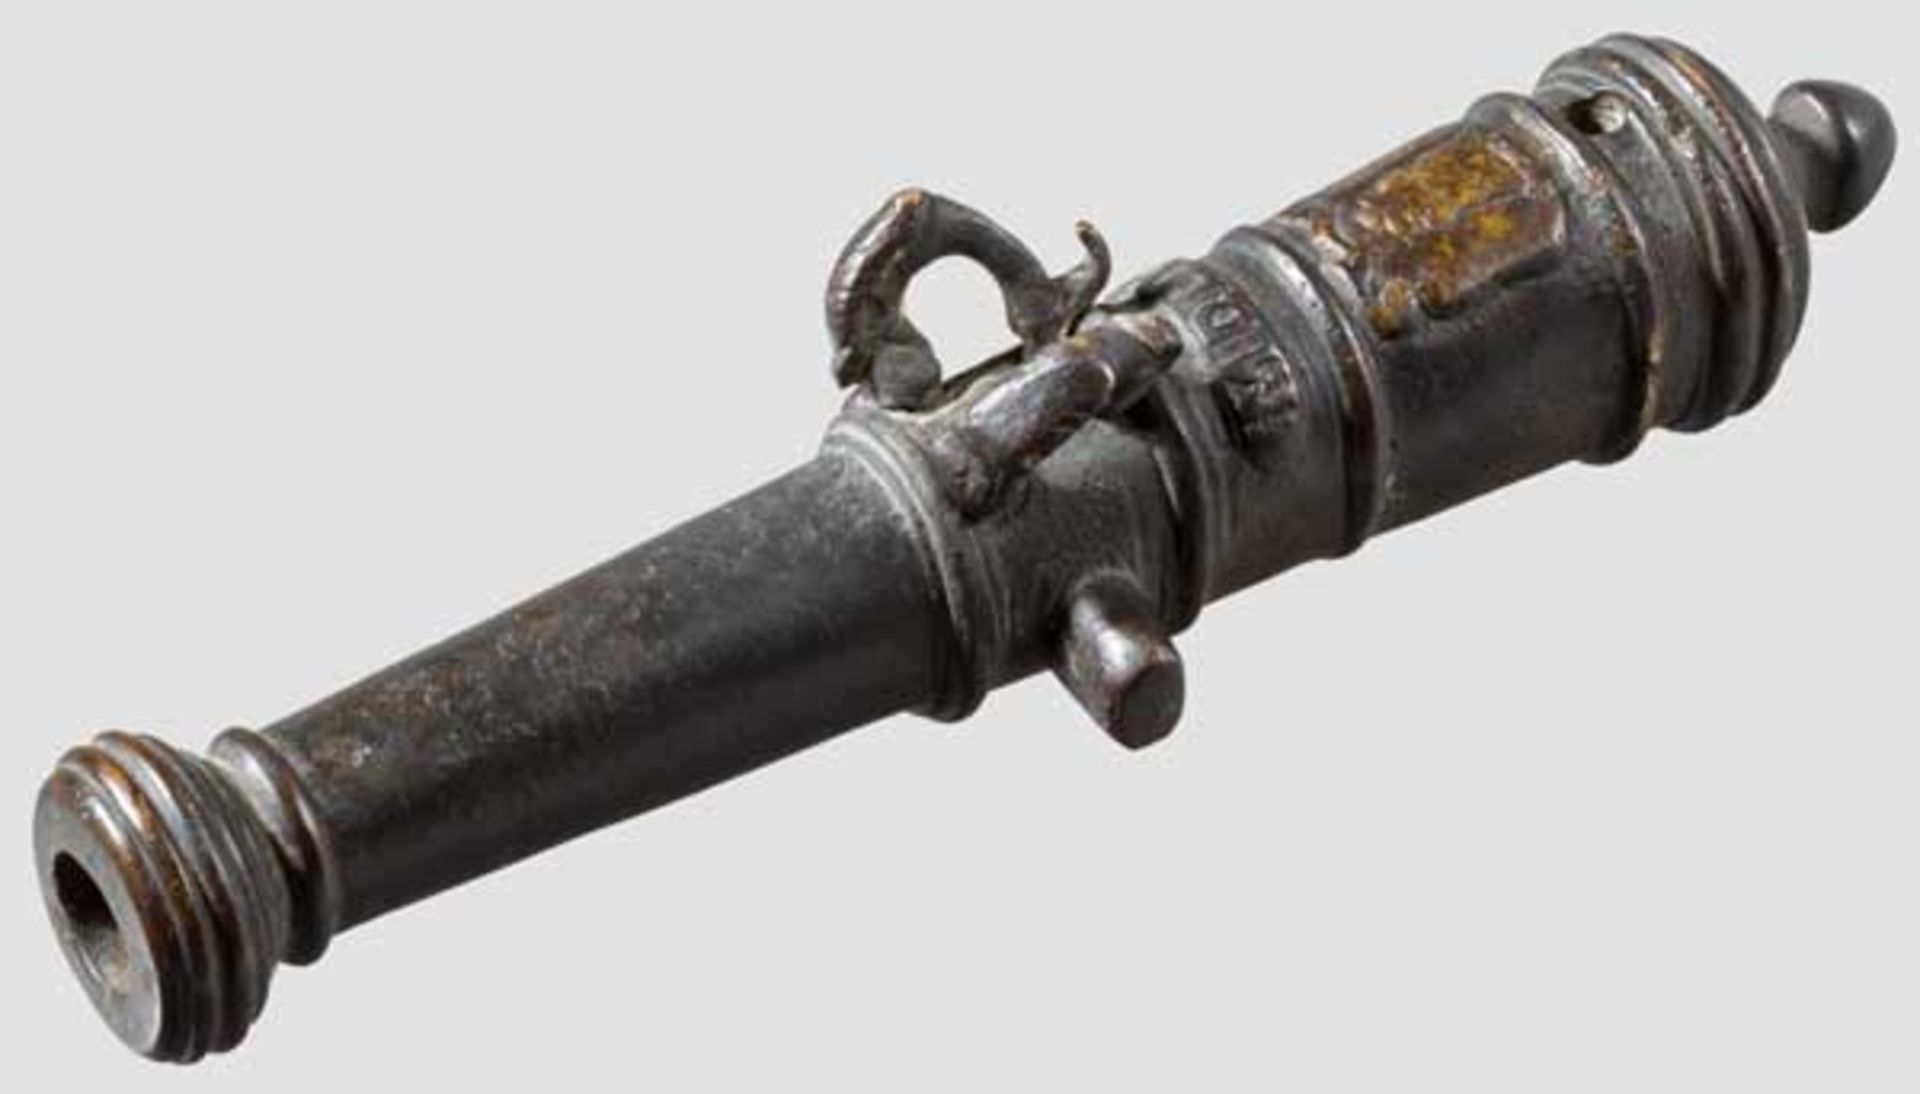 Modell-Kanonenrohr, Historismus, datiert 1570 Dunkelbraun patinierter Bronzeguss. Konisches,